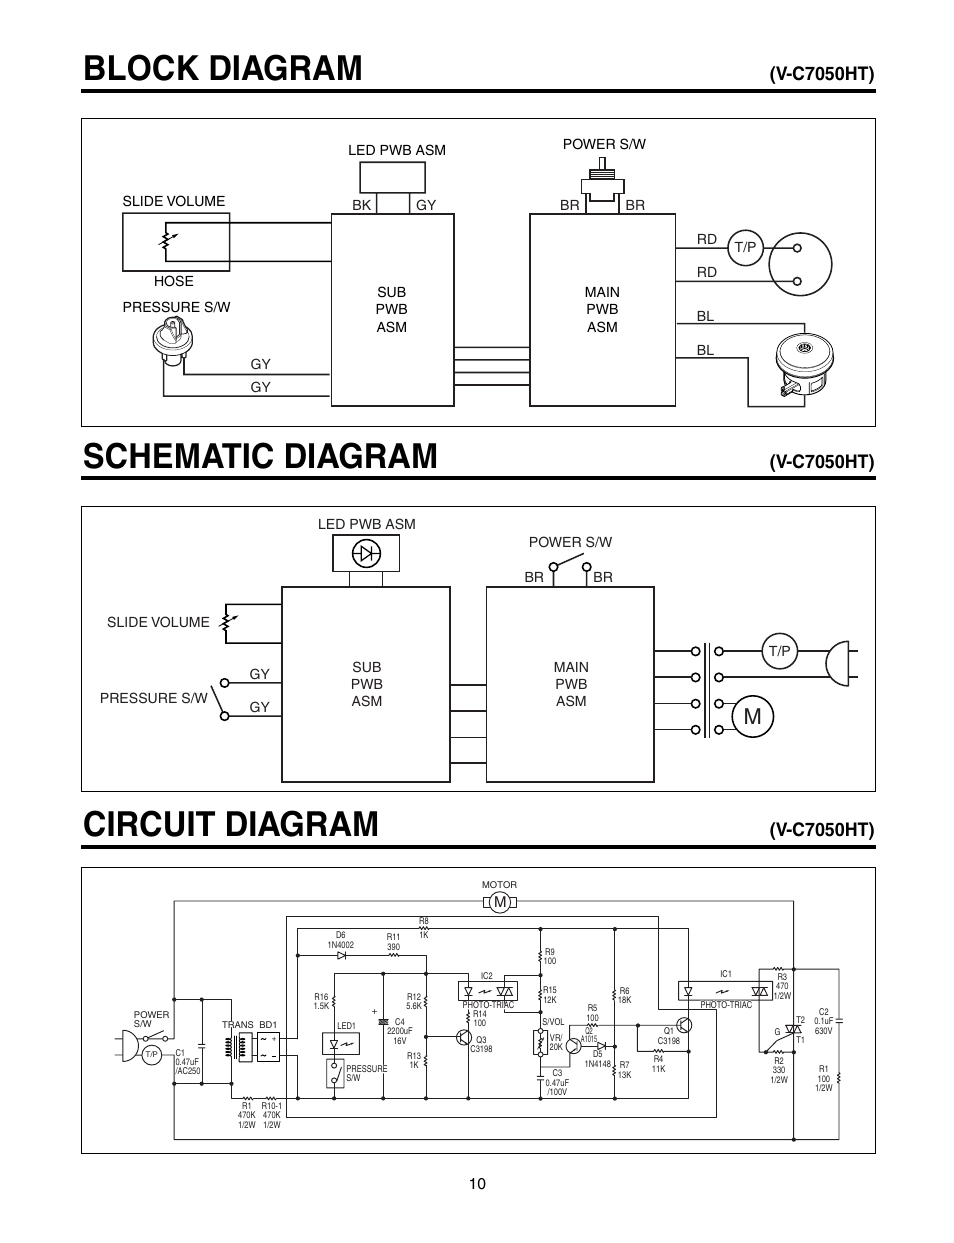 Block diagram, Schematic diagram, Circuit diagram | V-c7050ht) | LG V-C7050HT User Manual | Page 10 / 23